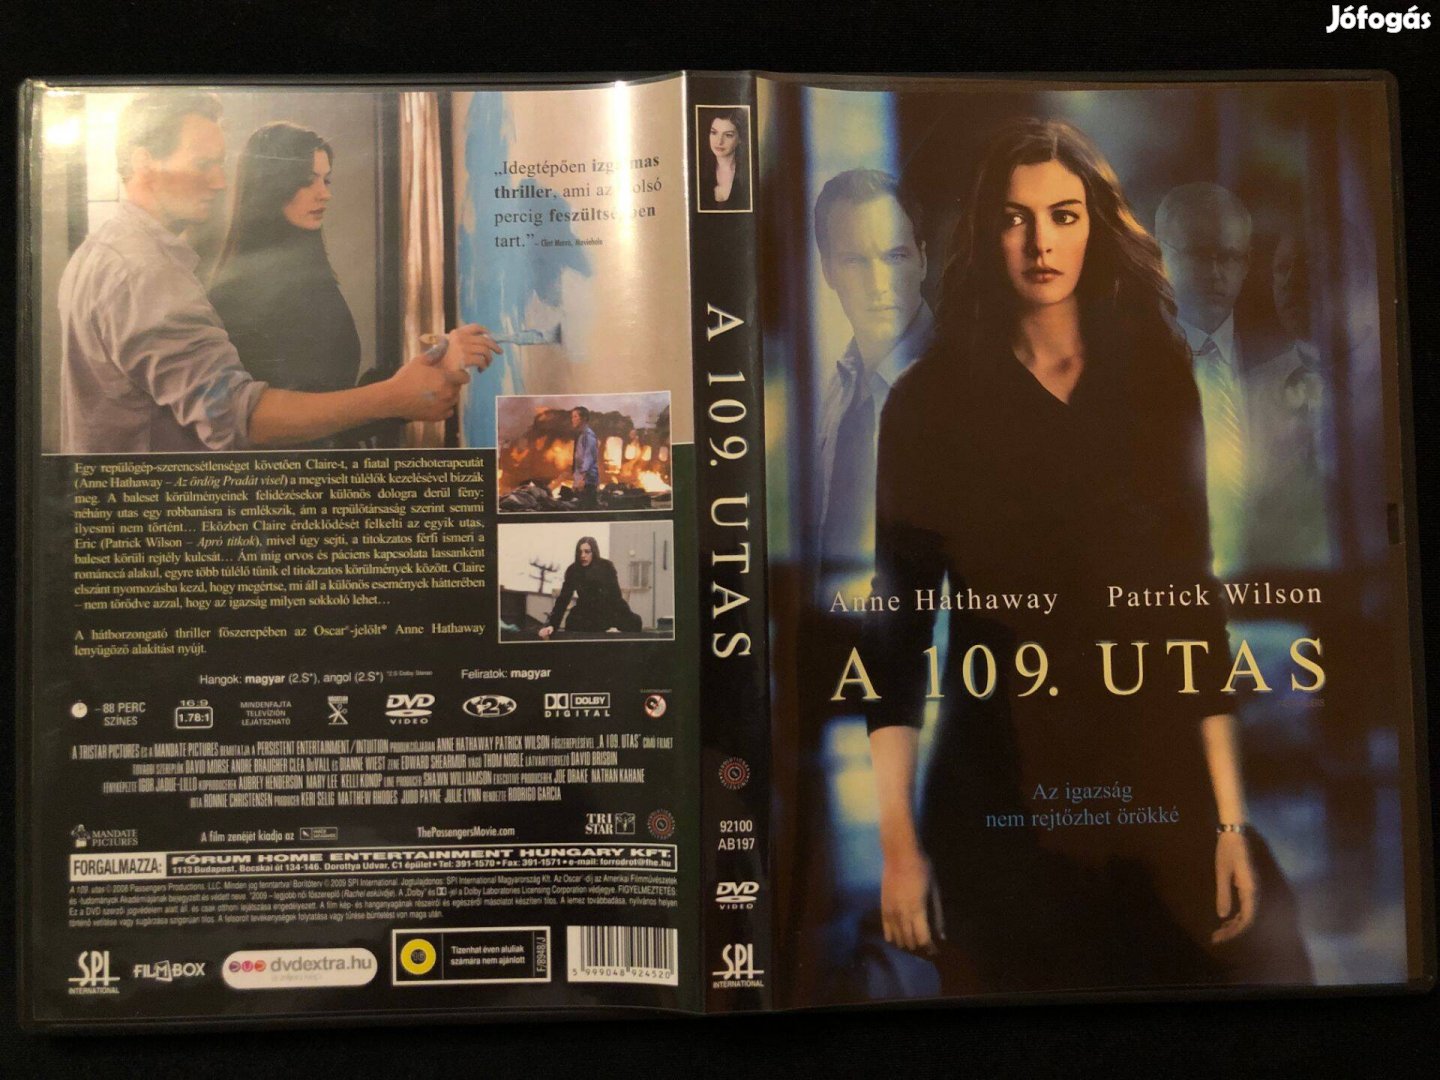 A 109. utas (karcmentes, Anne Hathaway, Patrick Wilson) DVD